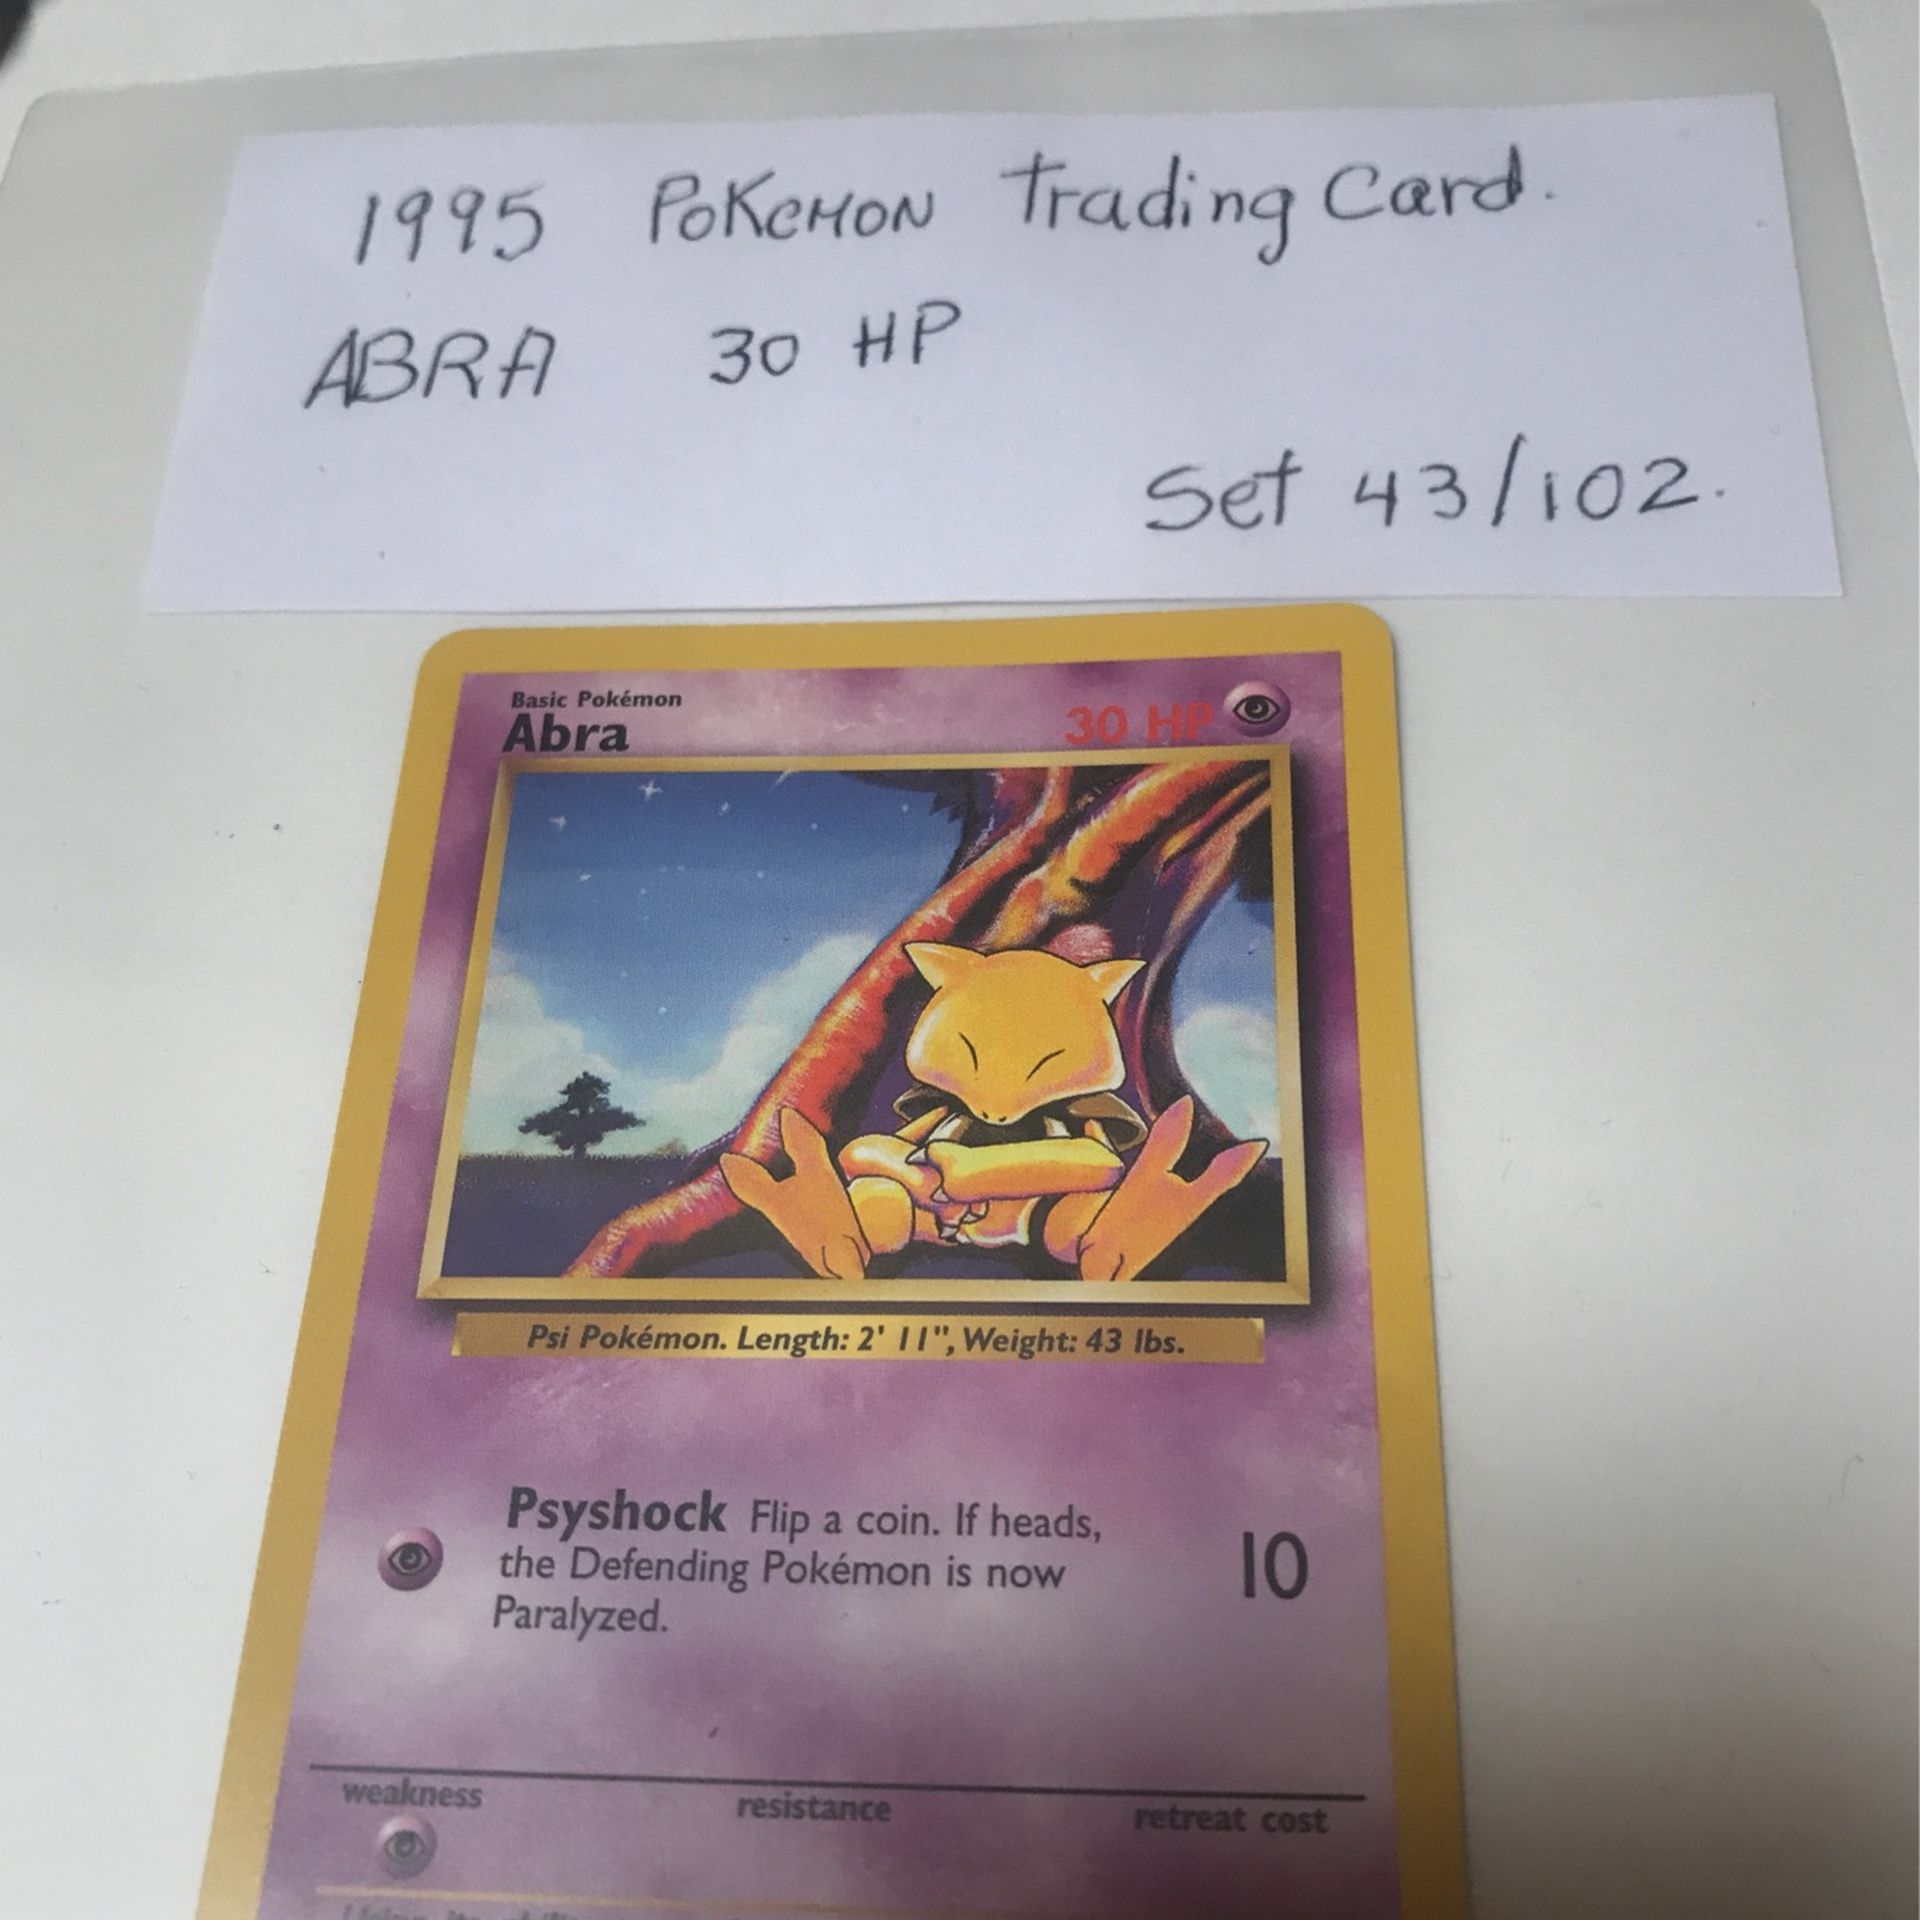 1995 Pokemon Trading Card ABRA 30HP